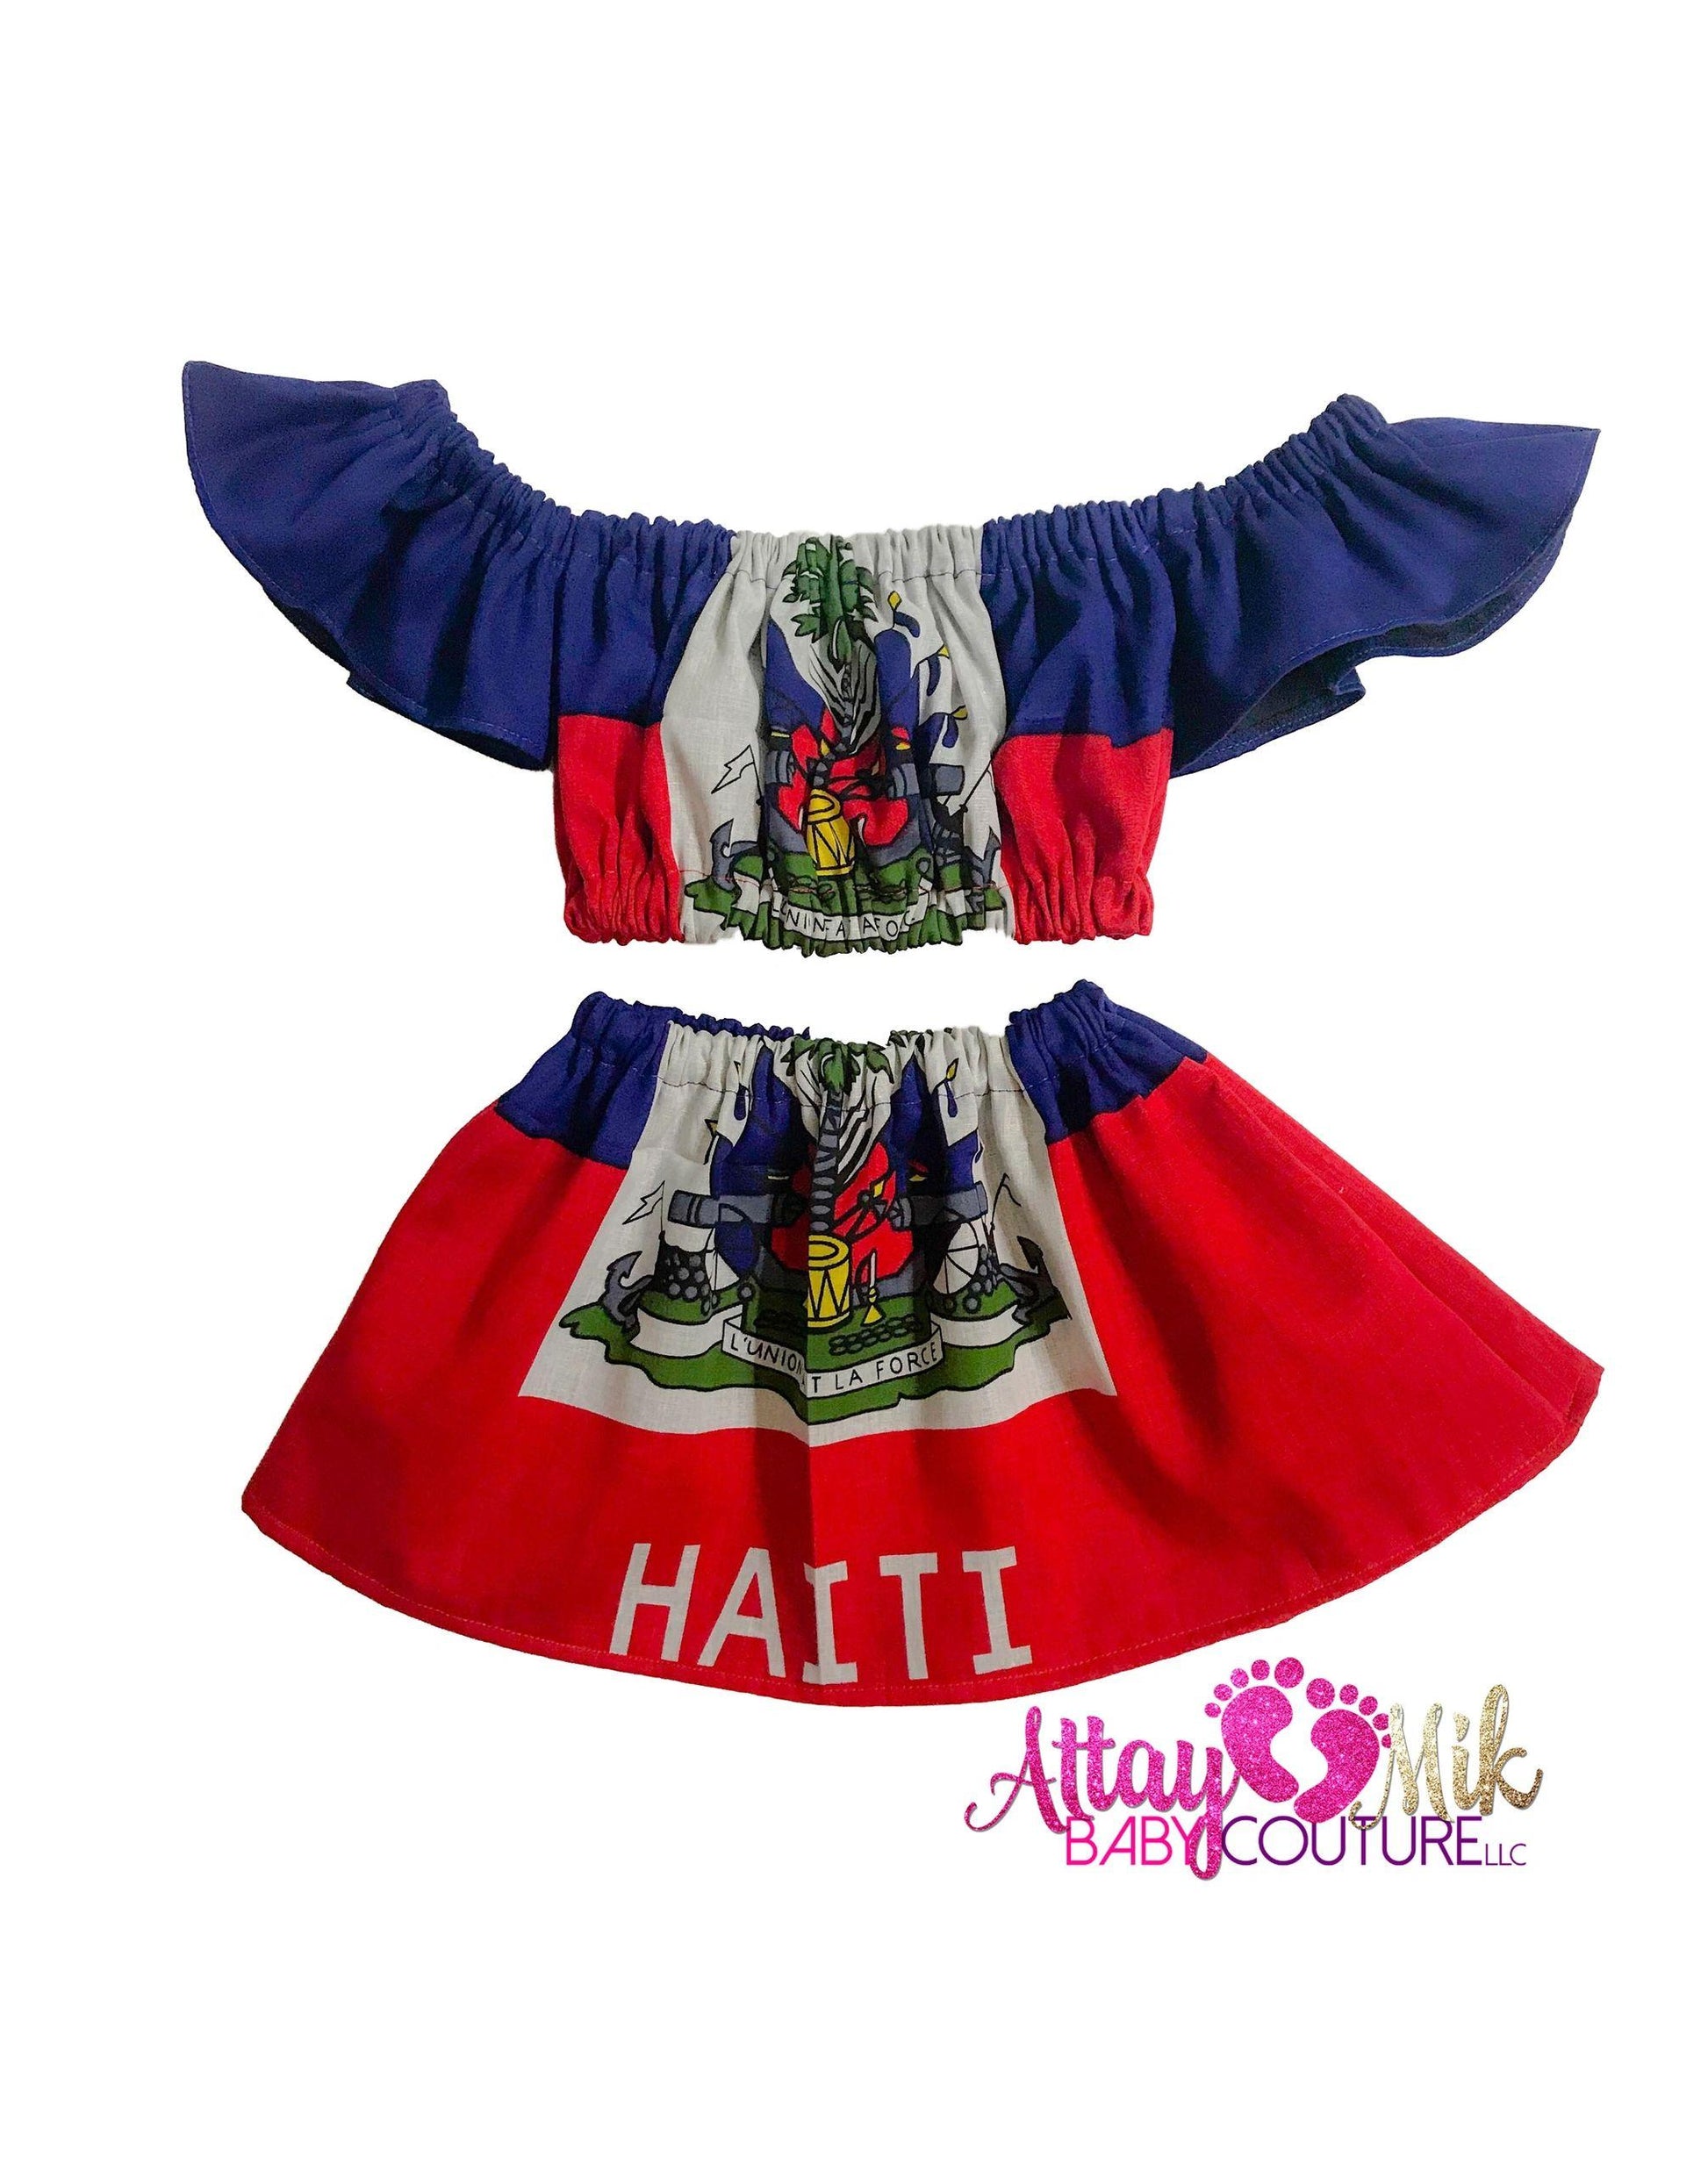 Haiti Flag Outfit